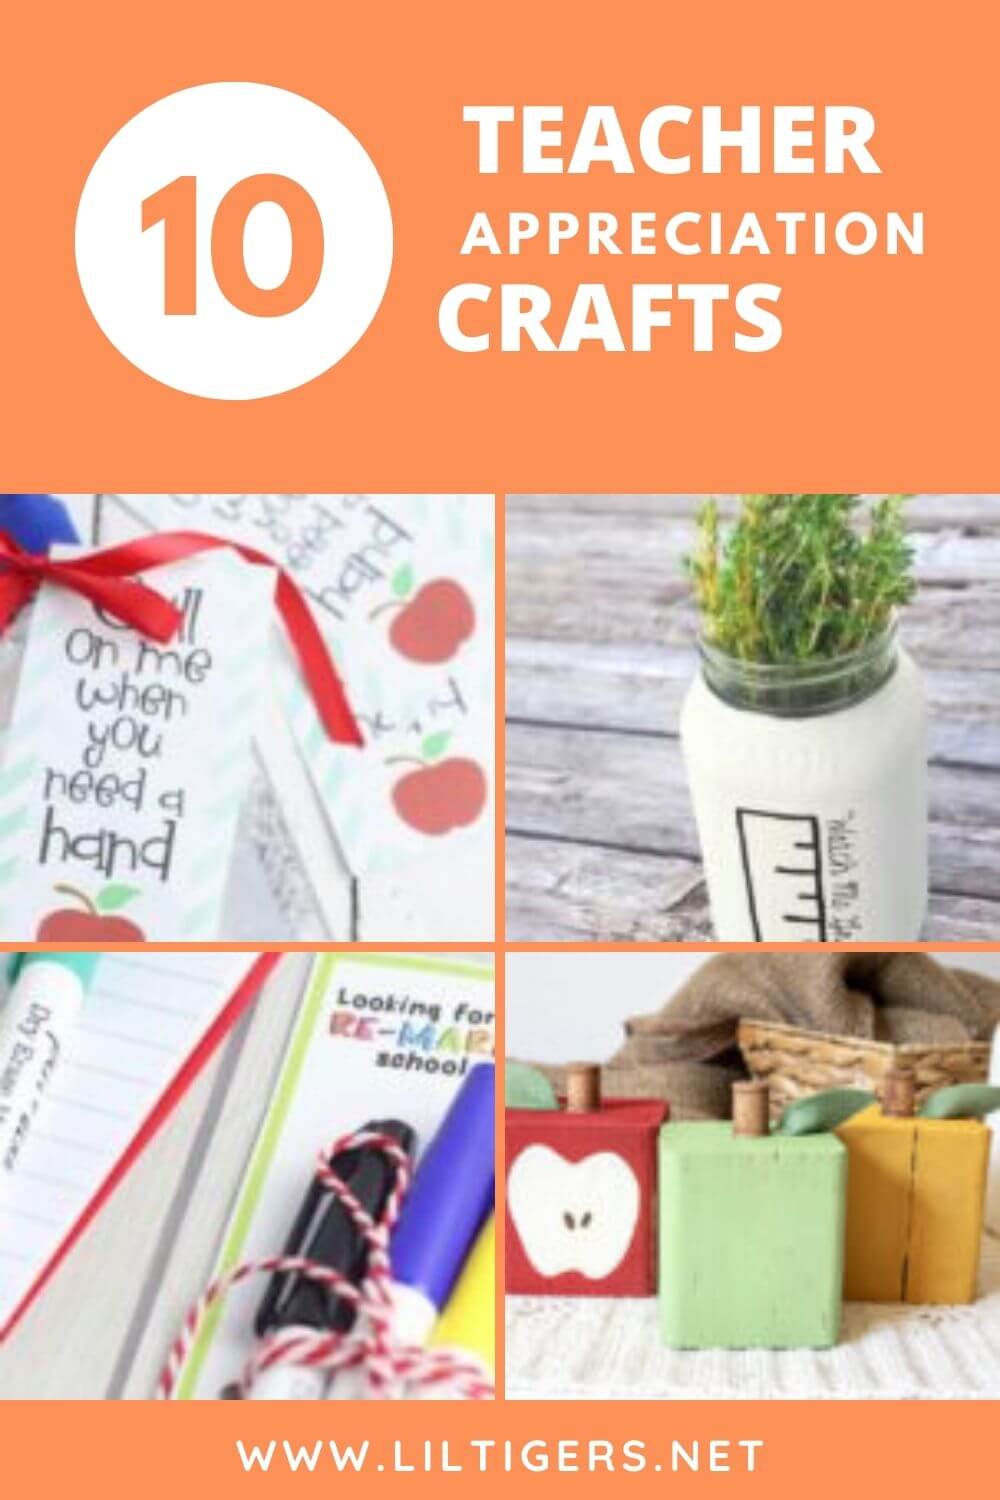 10 Awesome Teacher Appreciation Crafts